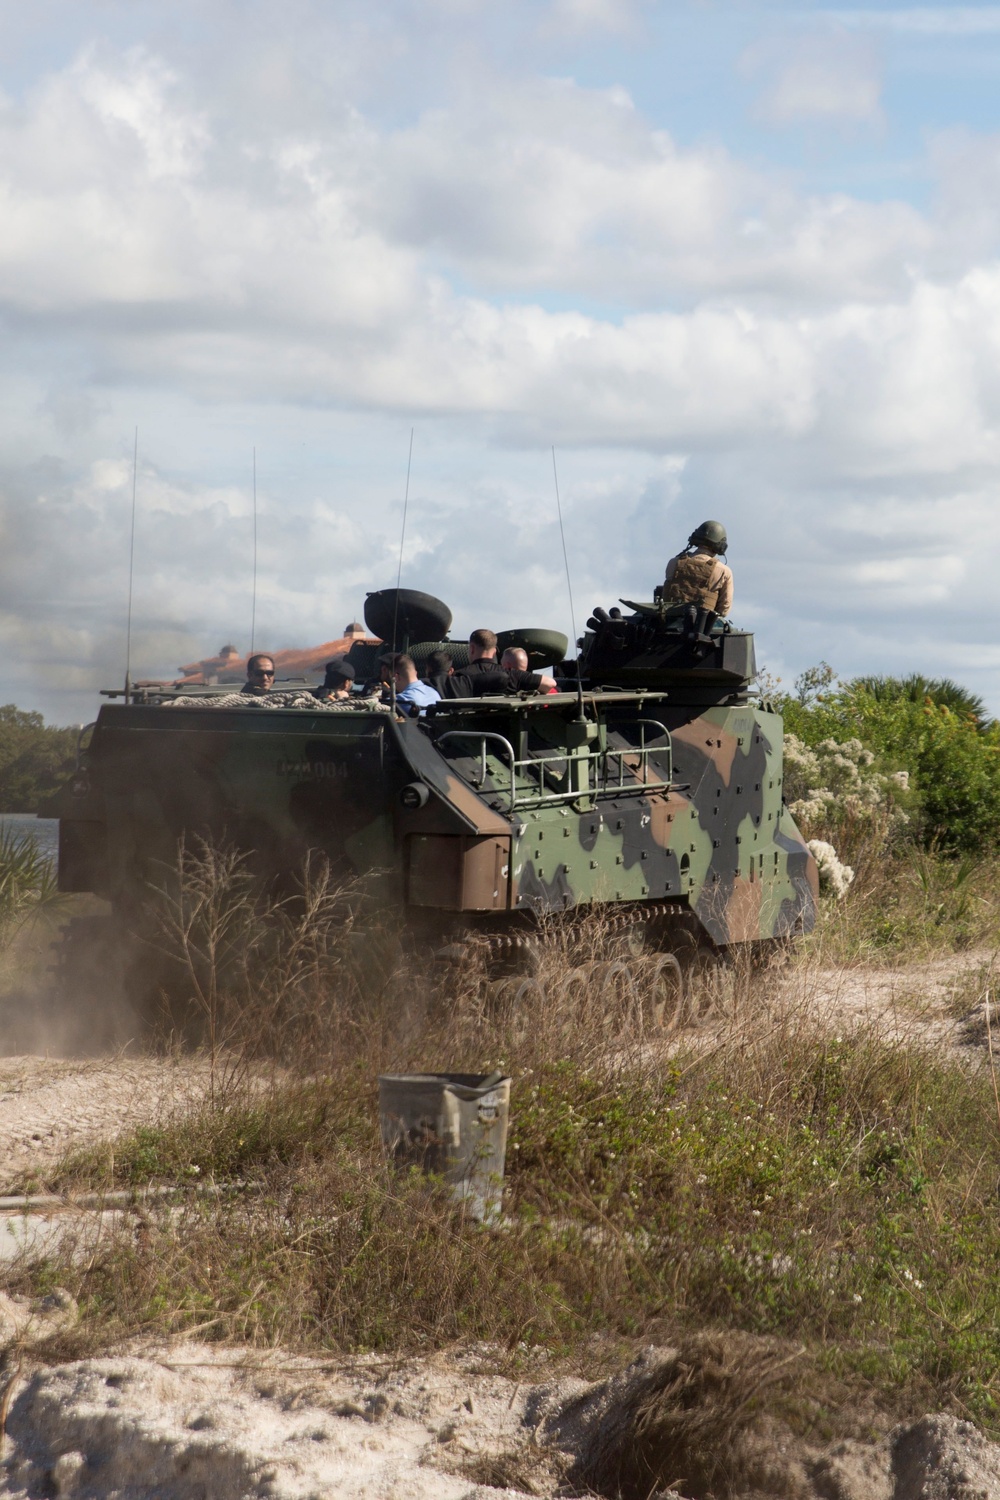 Marines demonstrate amphibian assault vehicle capabilities to Saudi Arabian counterparts